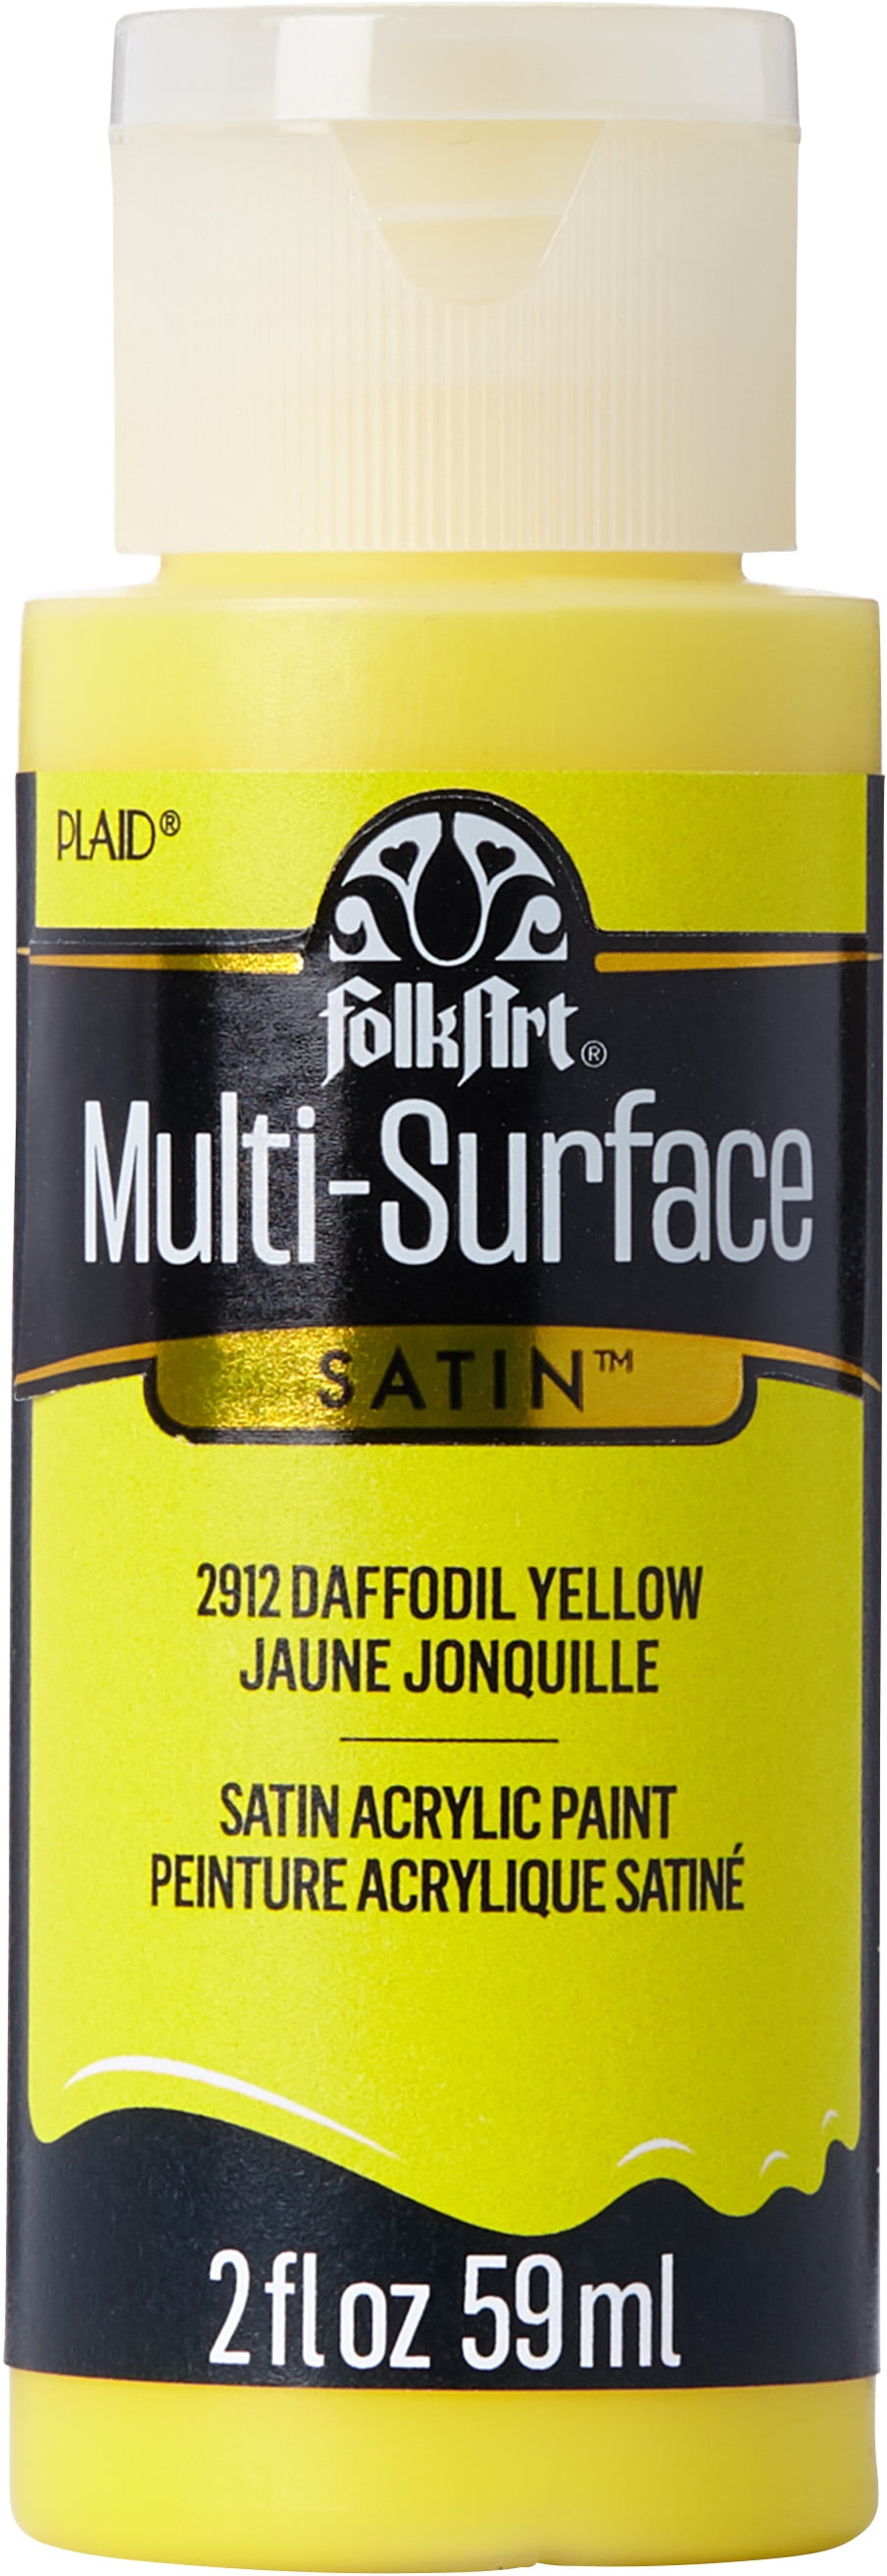 FolkArt Multi-Surface Acrylic Craft Paint, Satin Finish, Daffodil Yellow, 2 fl oz